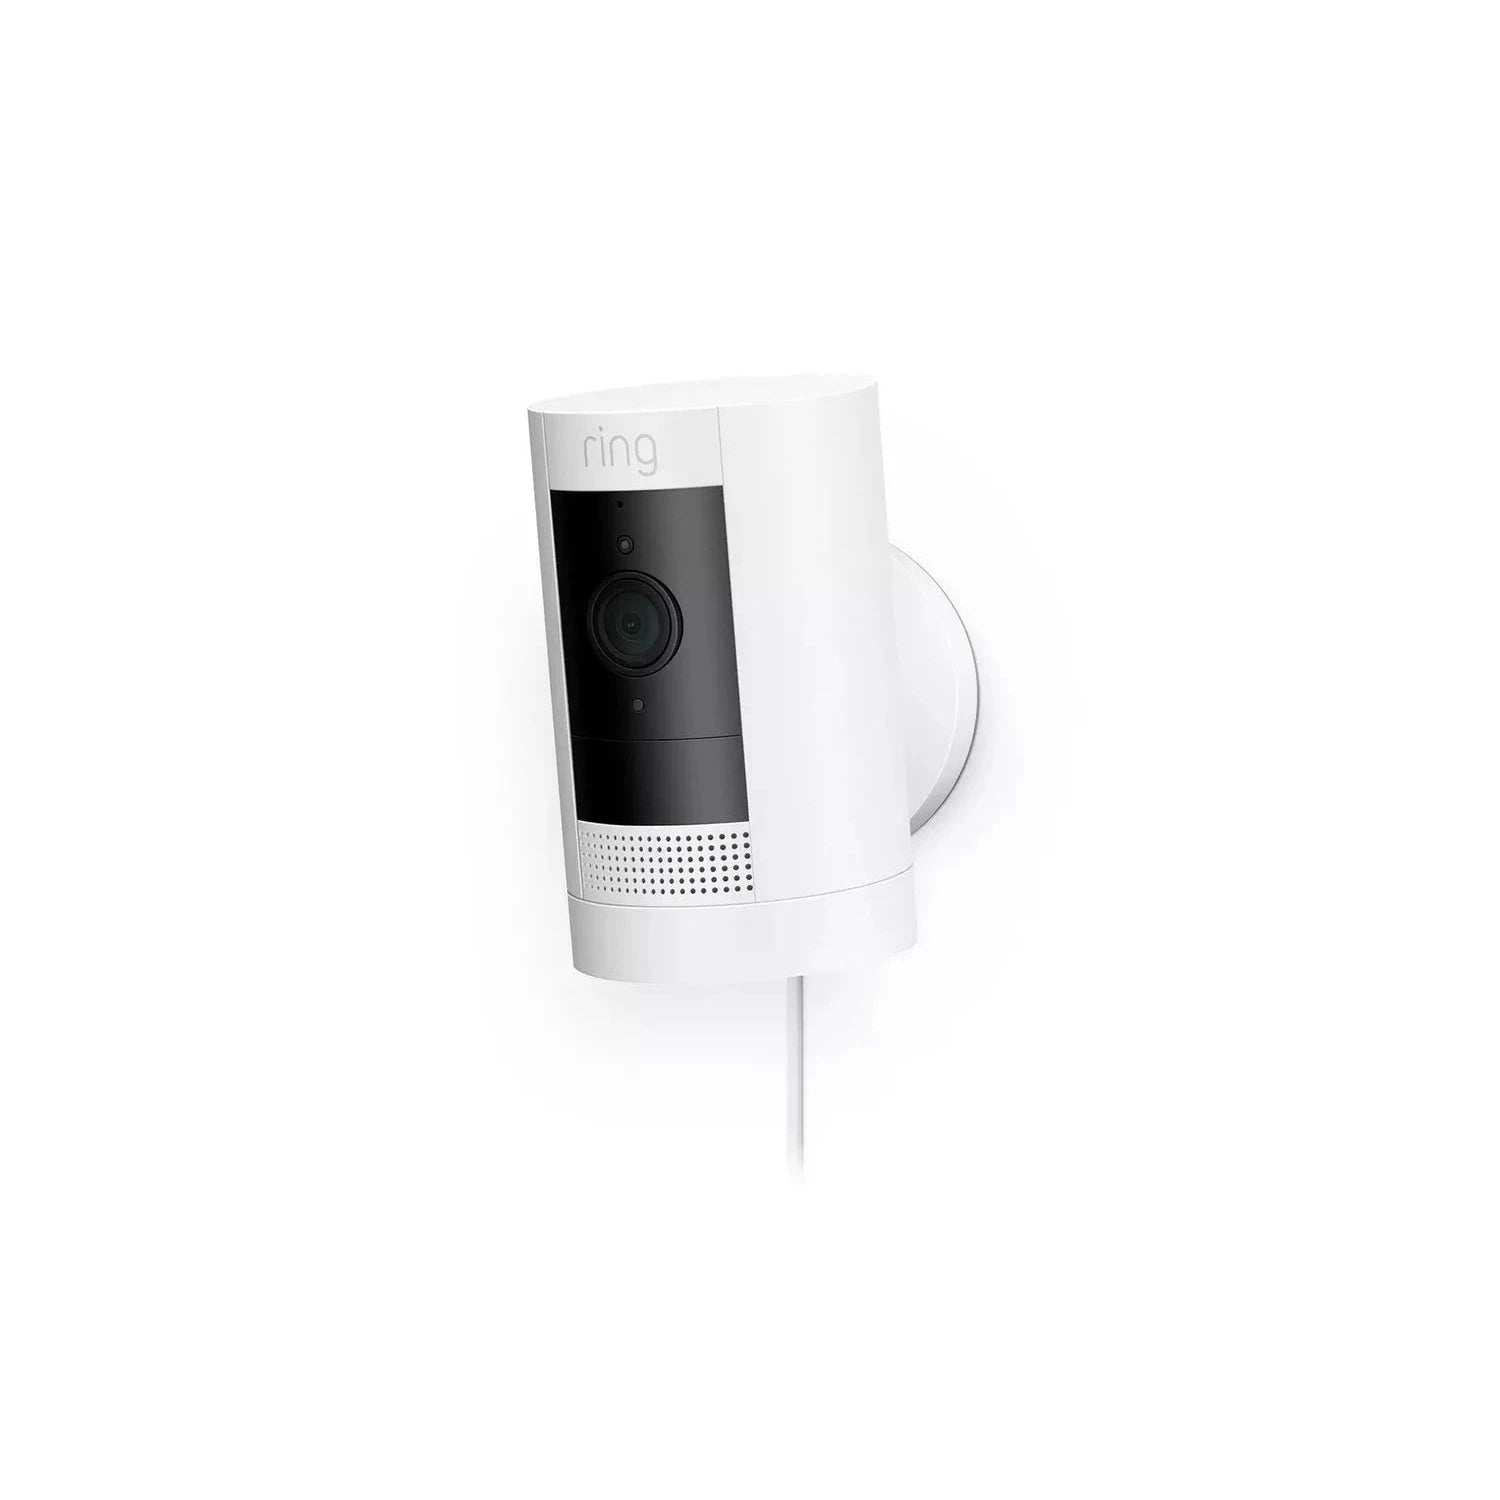 Ring Stick Up Cam Plug-In Security Camera - White - Refurbished Pristine